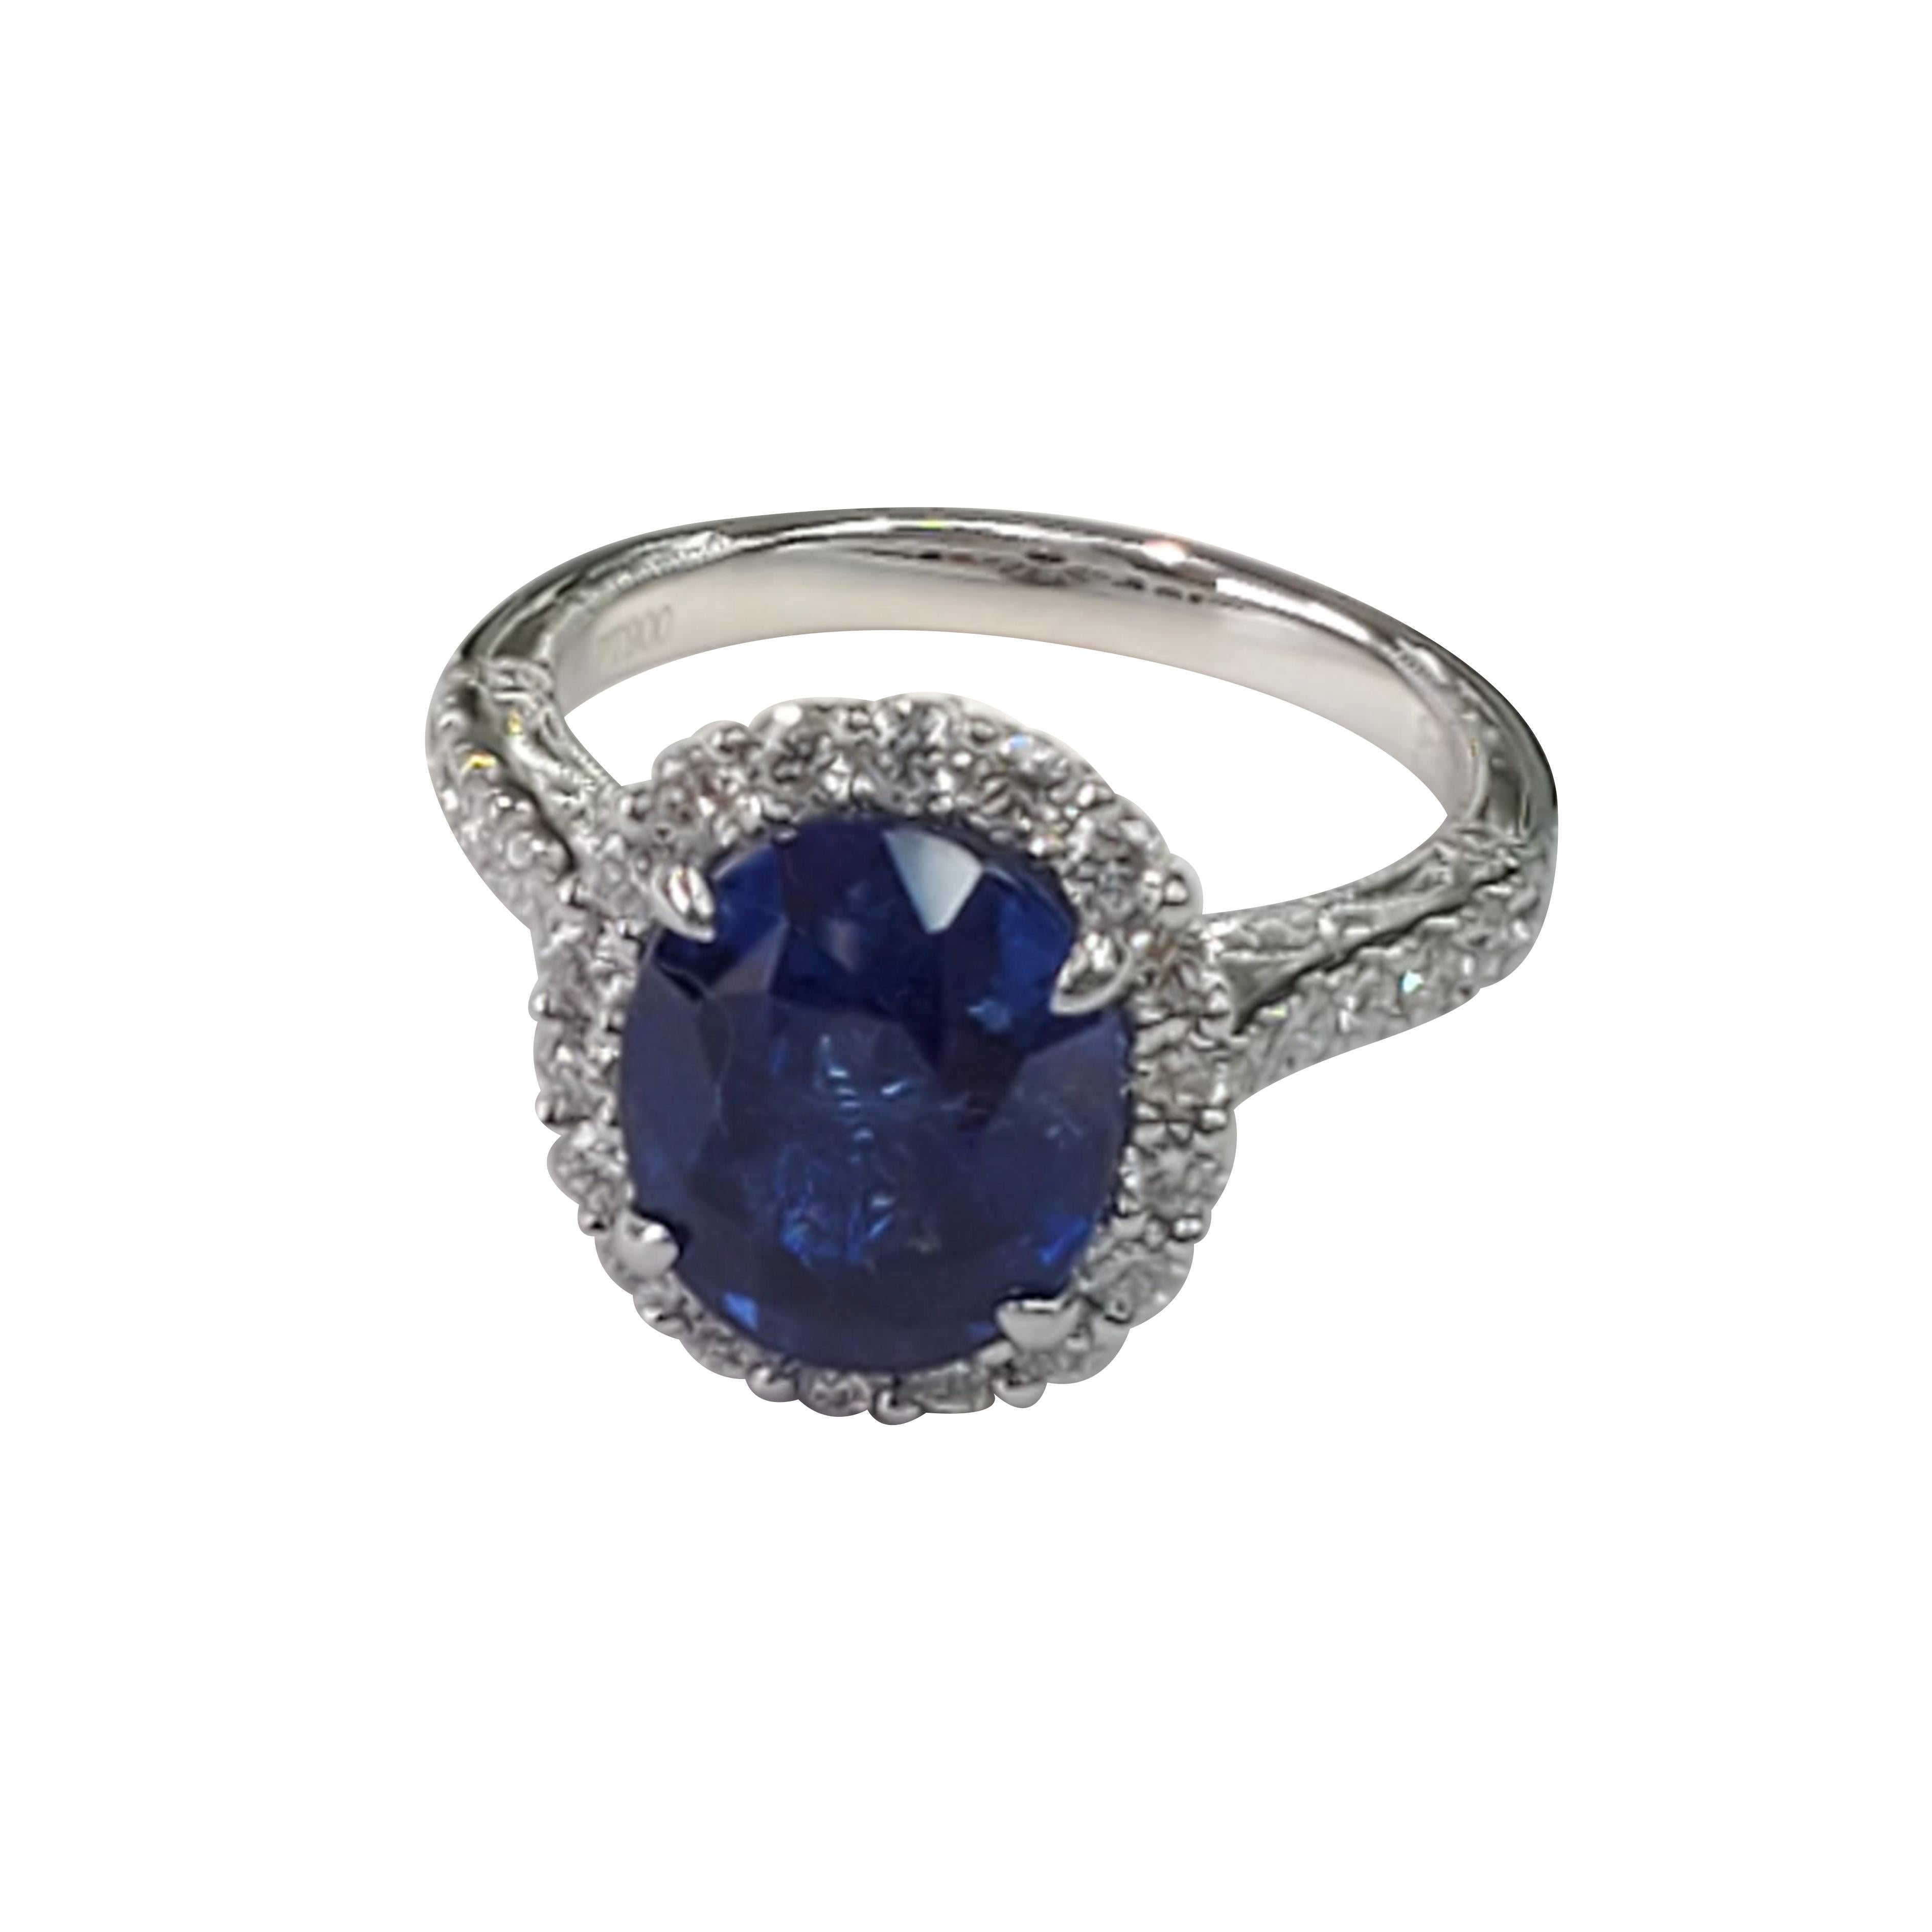 GIA CERTIFIED

Blue Sapphire - 5.72ct

White Diamonds - 0.90ct

Platinum Ring